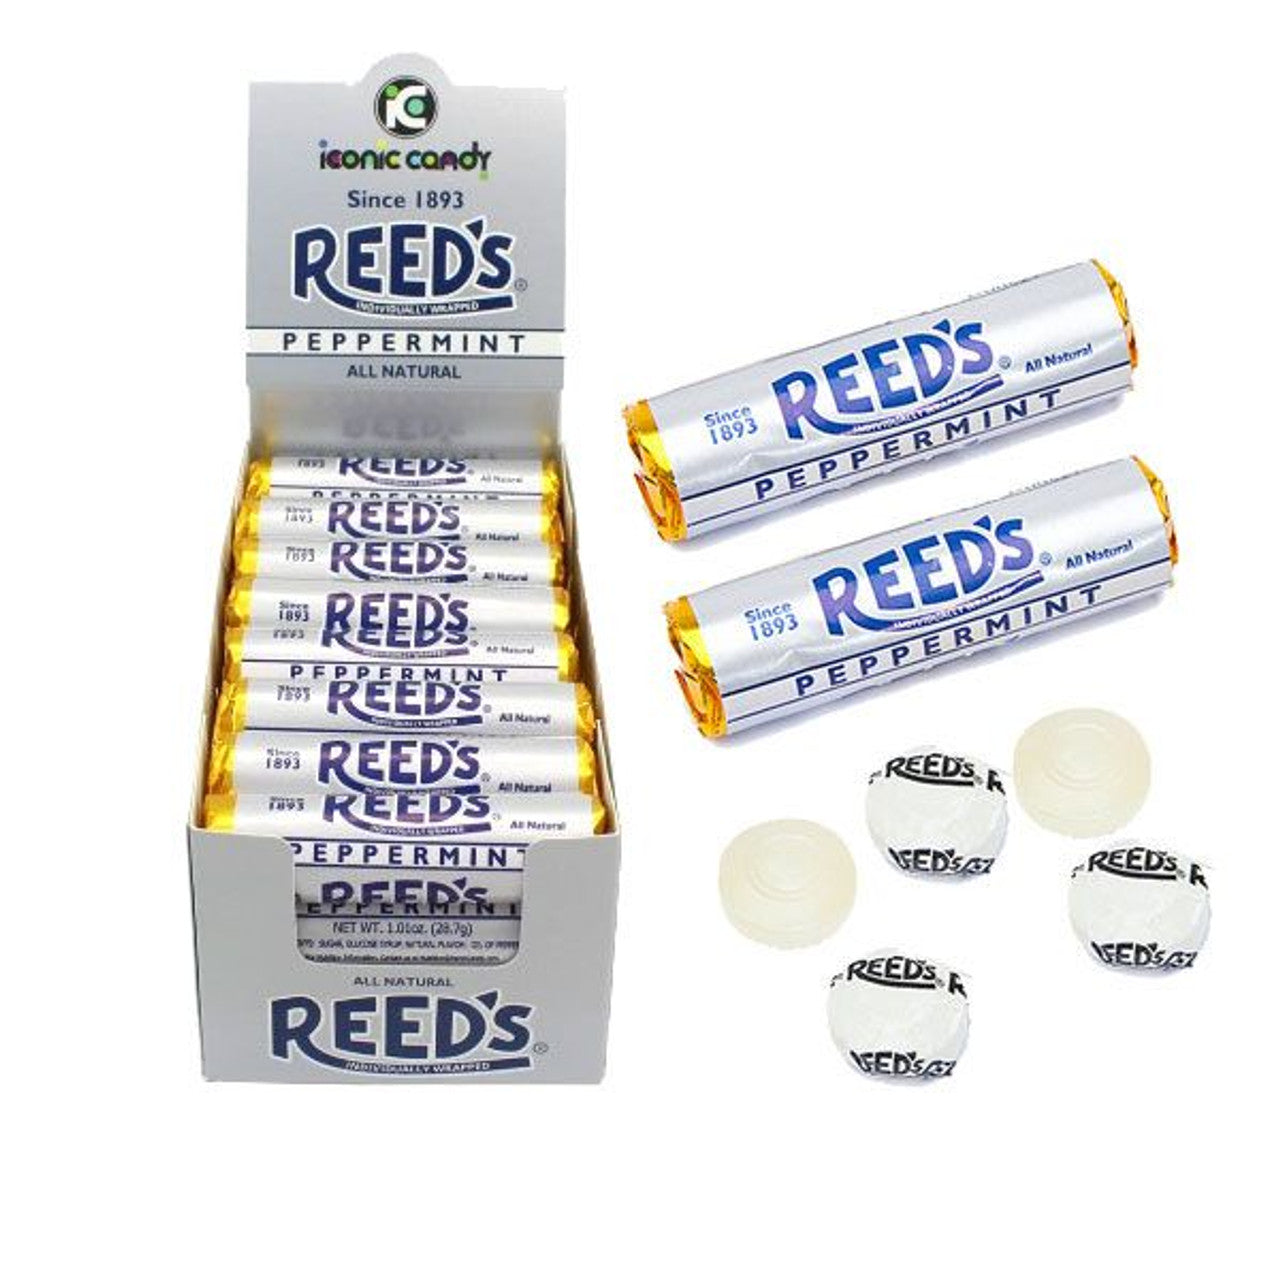 Reed's Peppermint Rolls